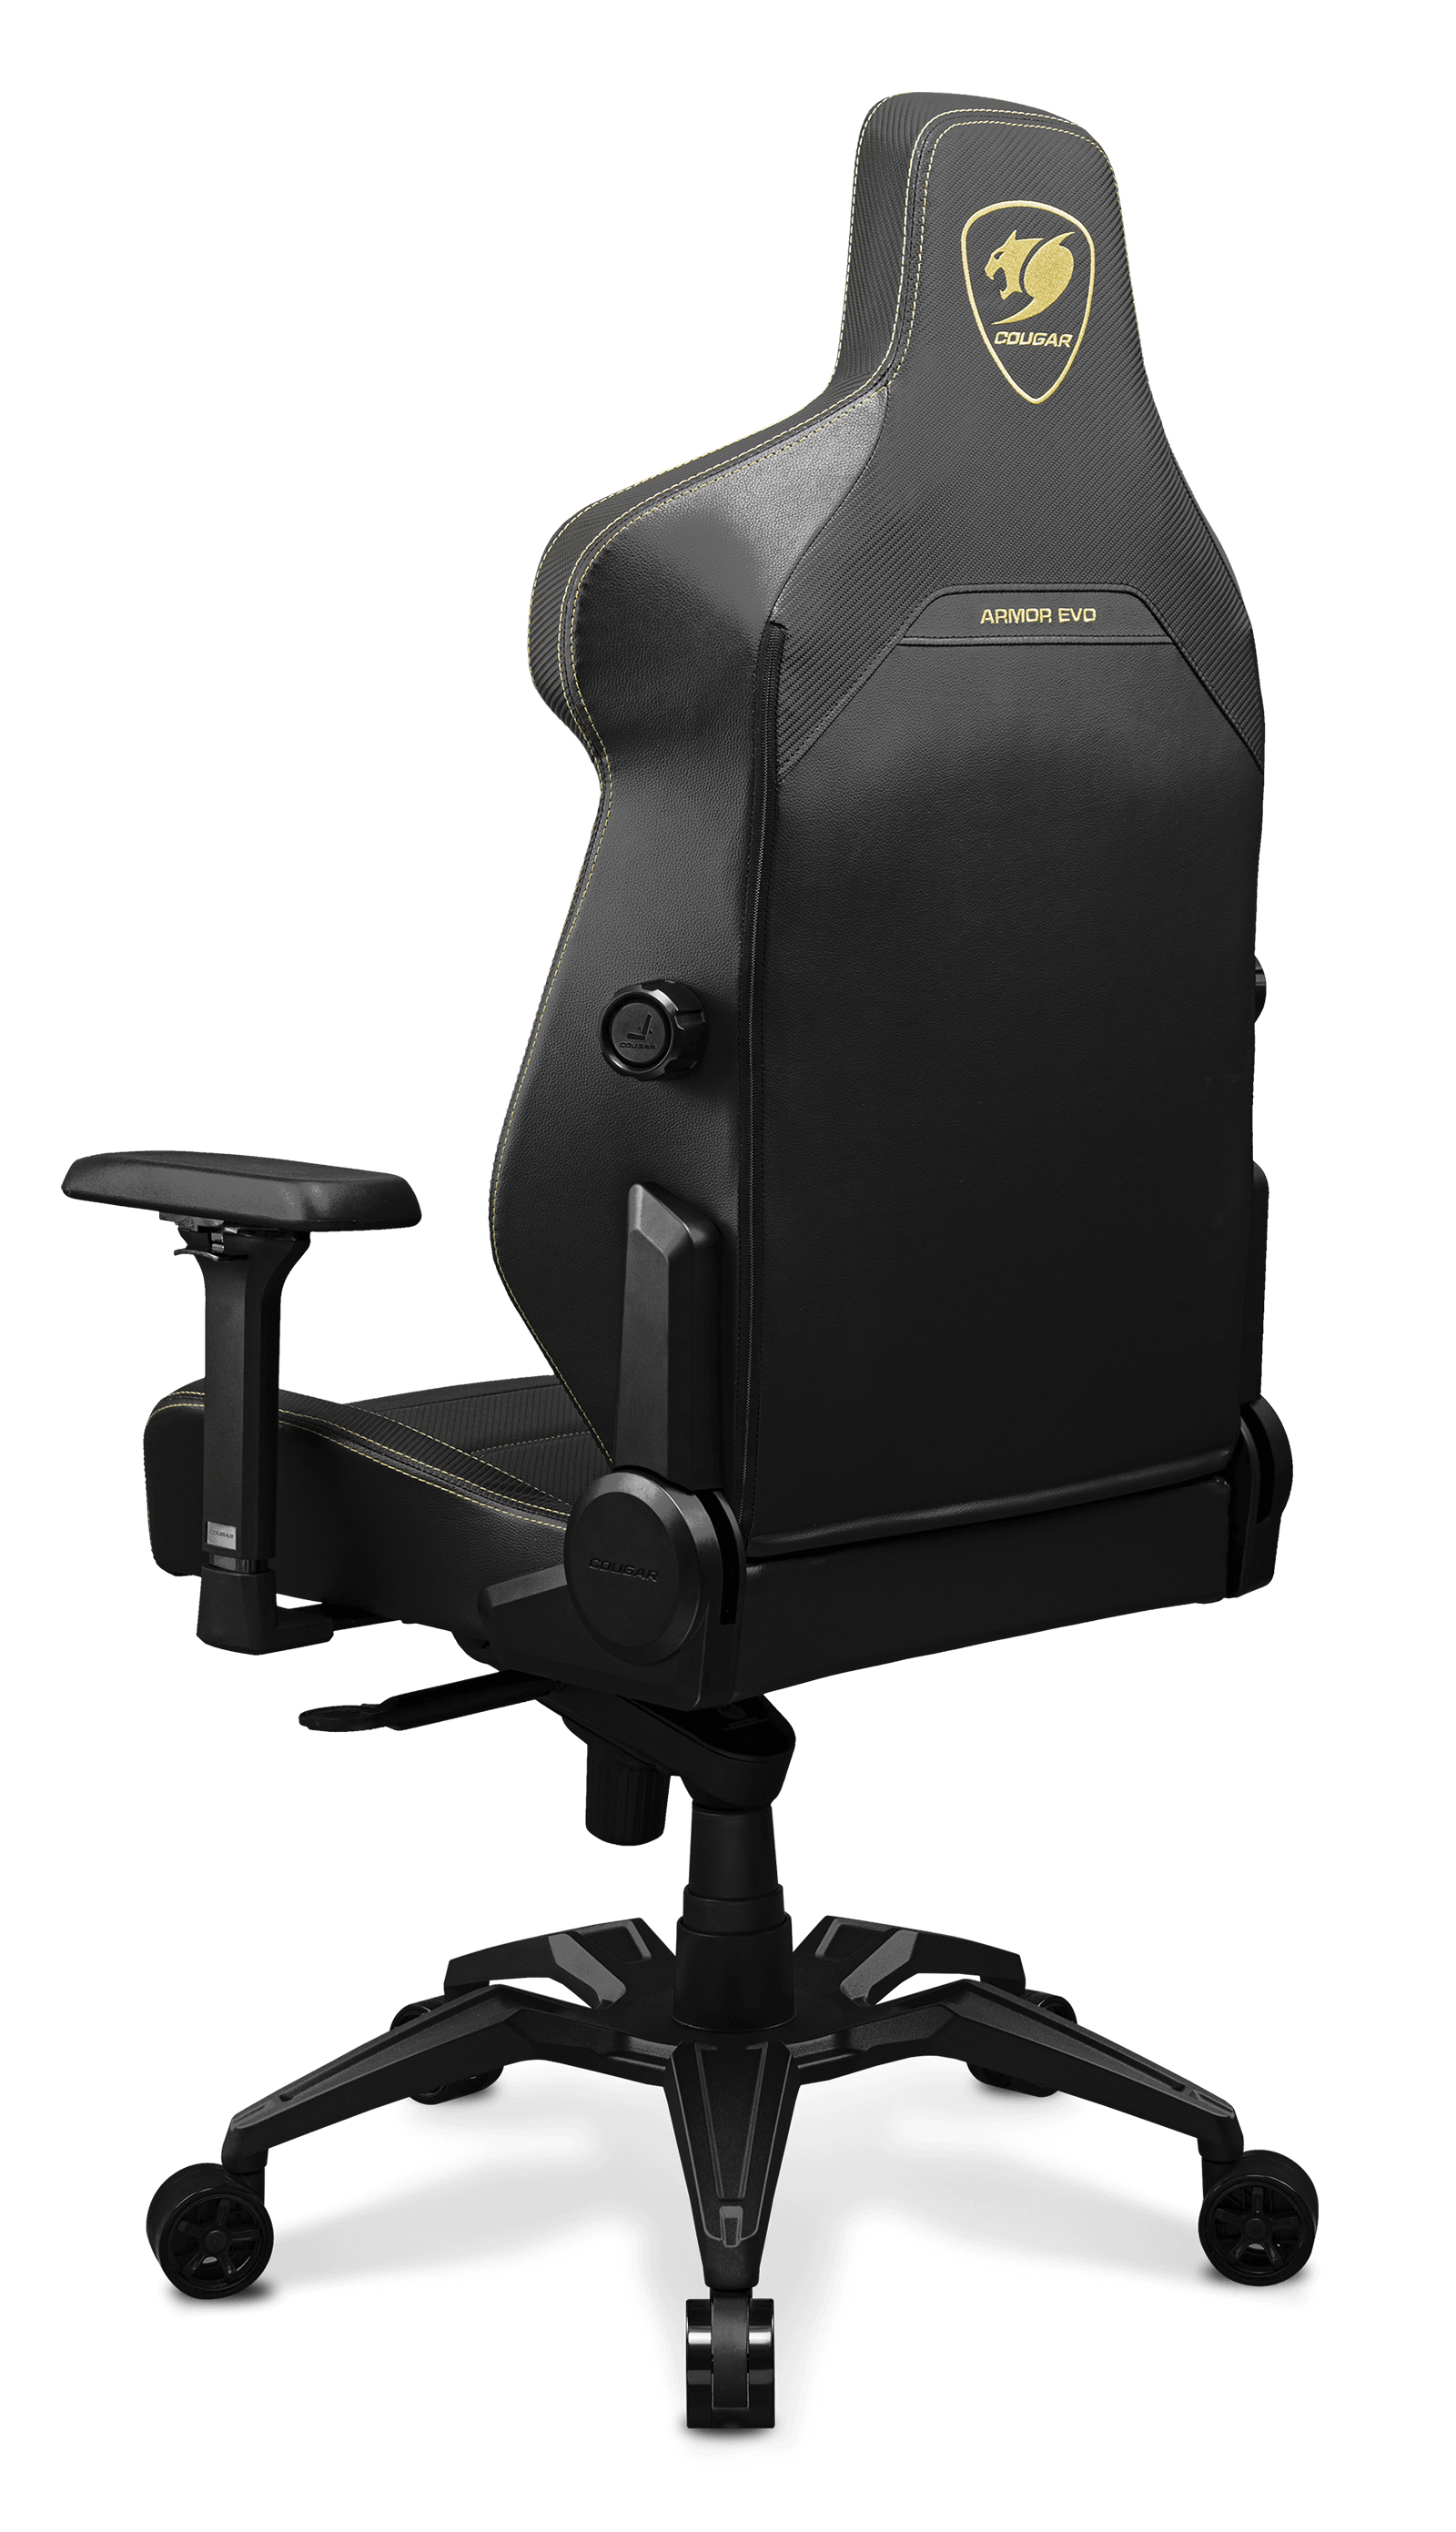 COUGAR ARMOR EVO ROYAL Gaming Chair (黑金色)